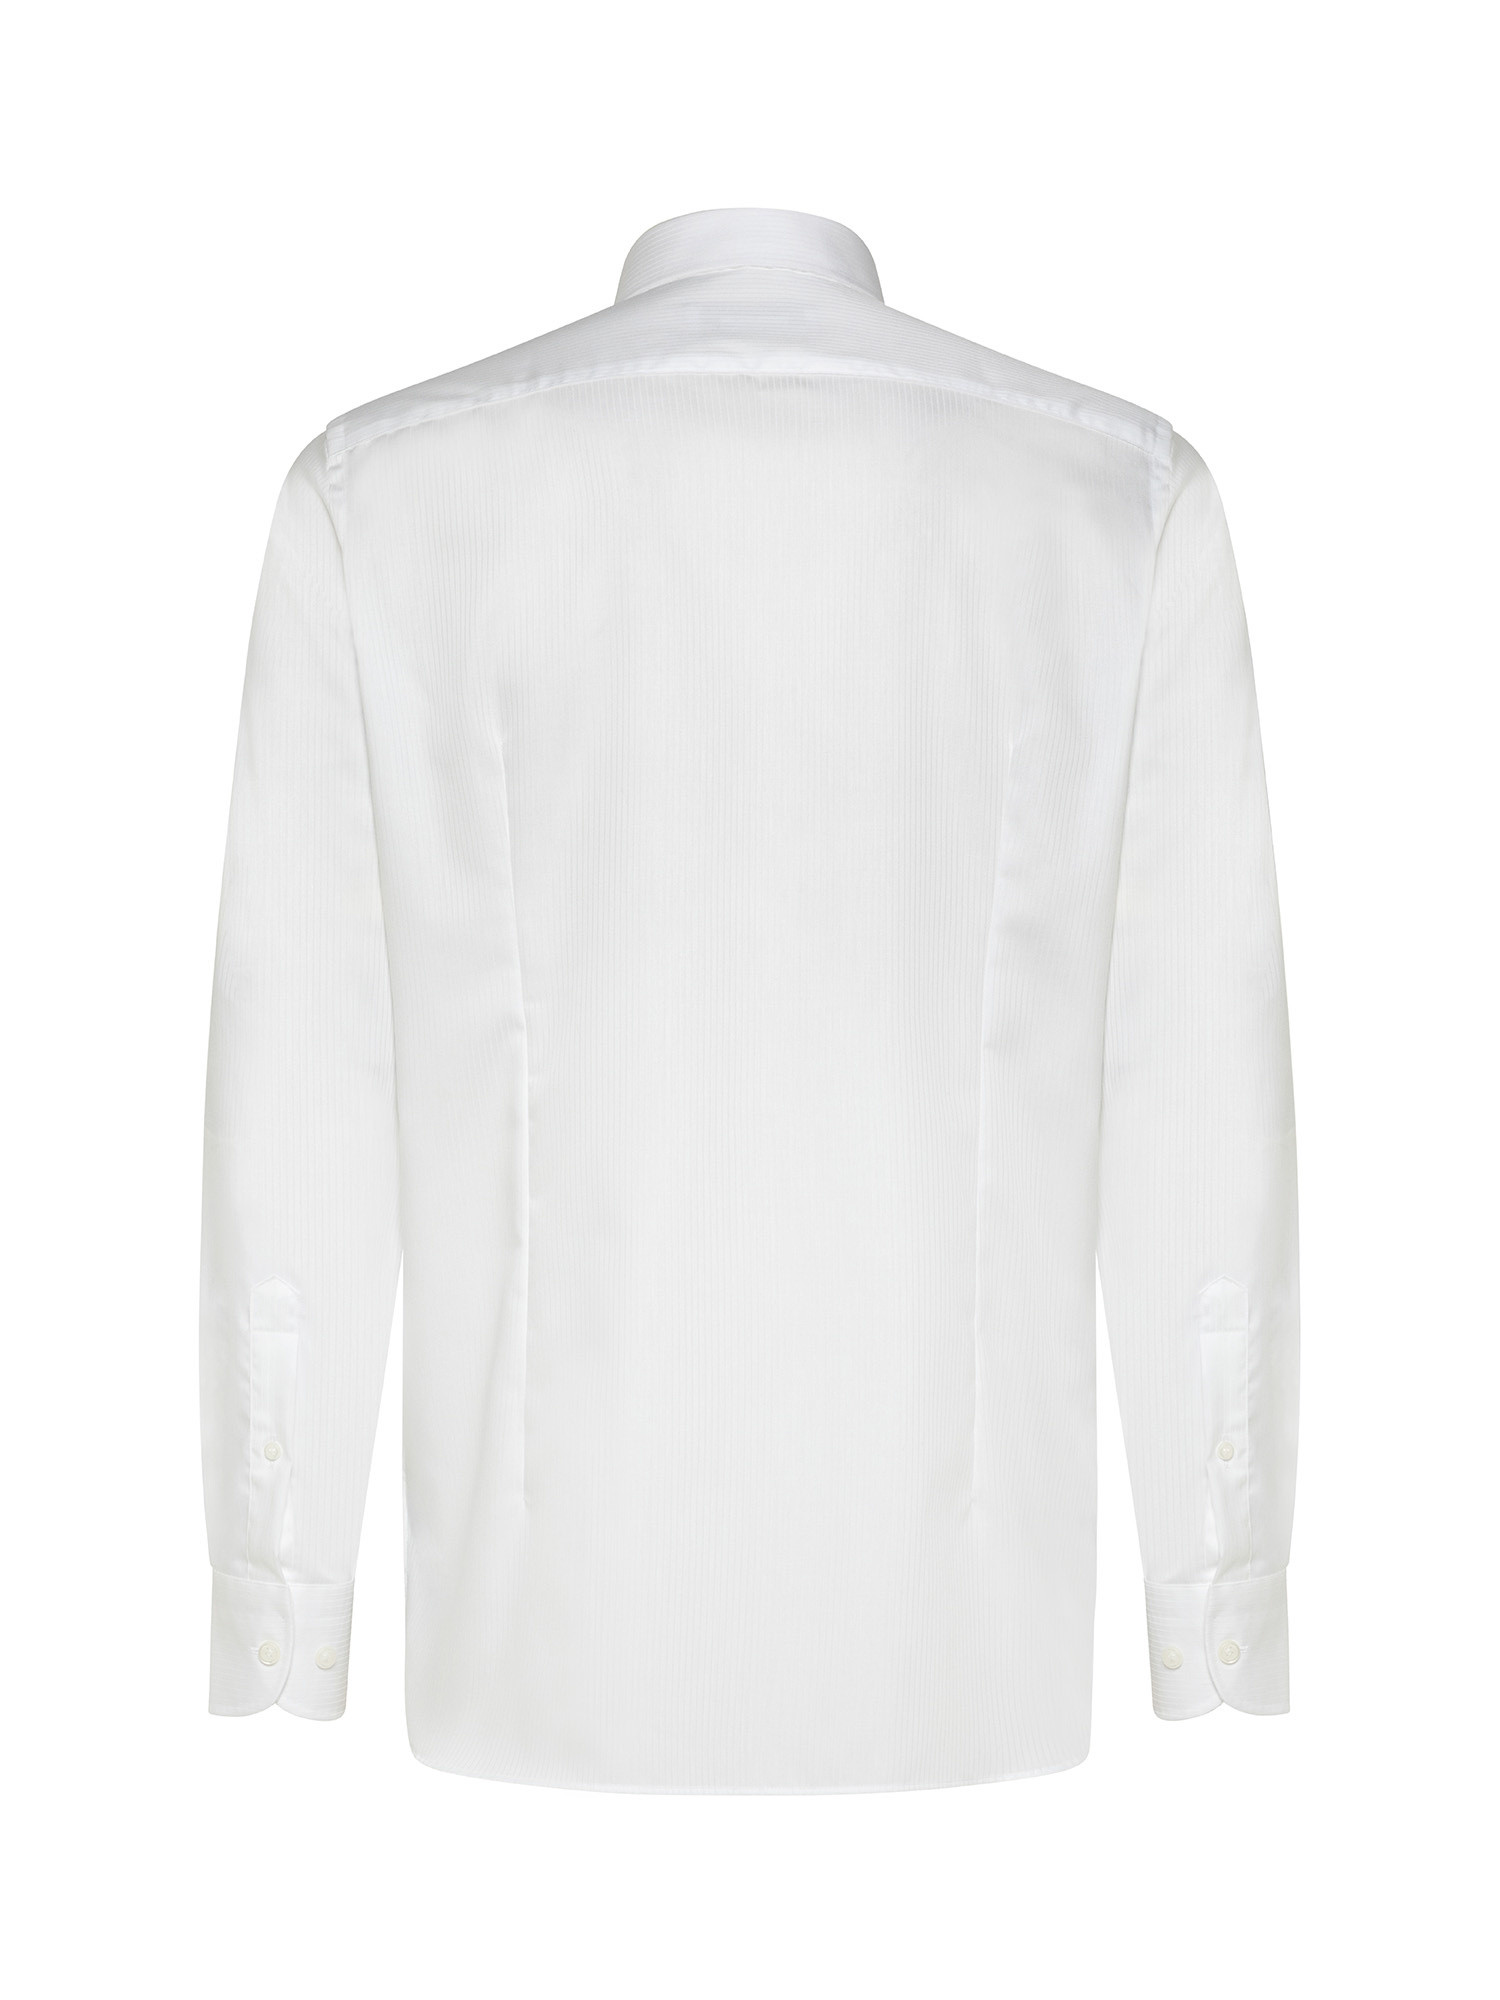 Camicia slim fit in puro cotone, Bianco 3, large image number 2